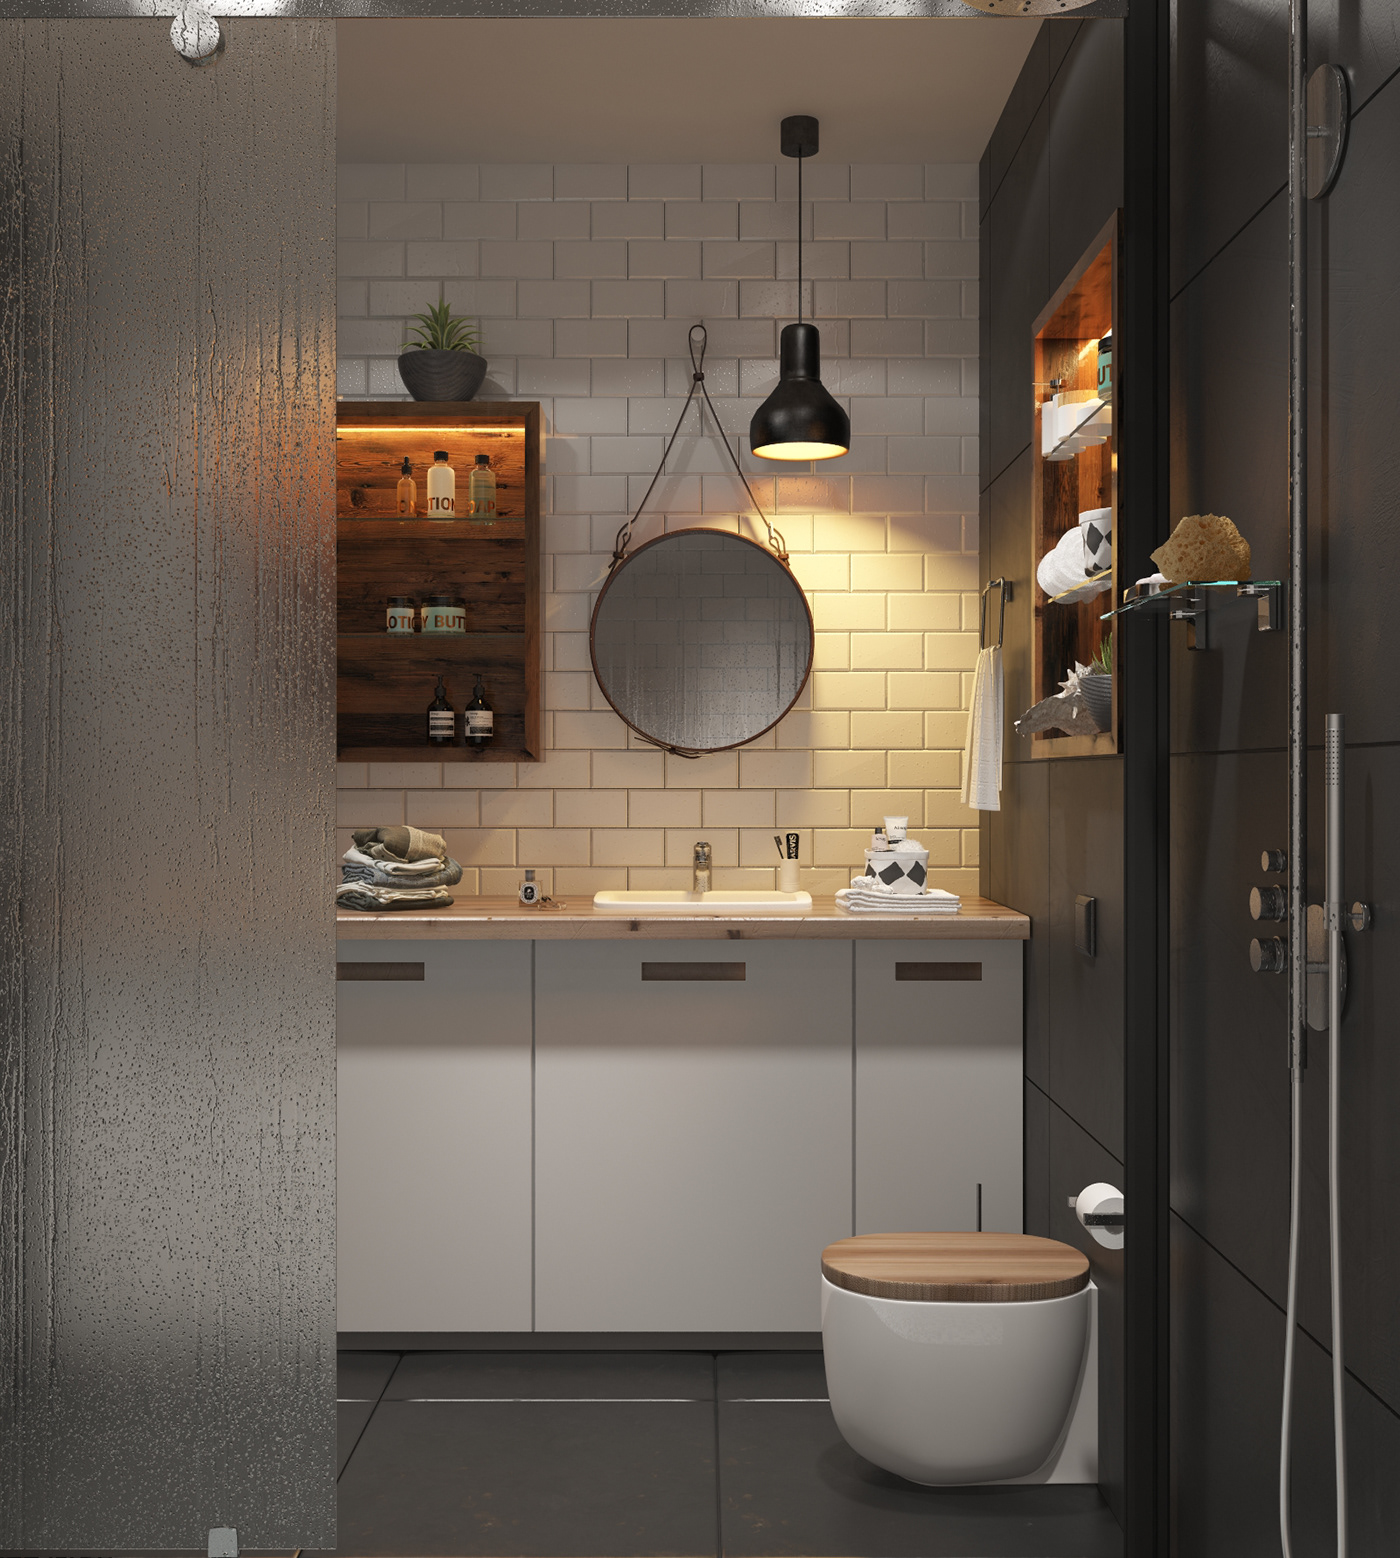 bathroom dark tile LOFT wet drops SHOWER White design mirror